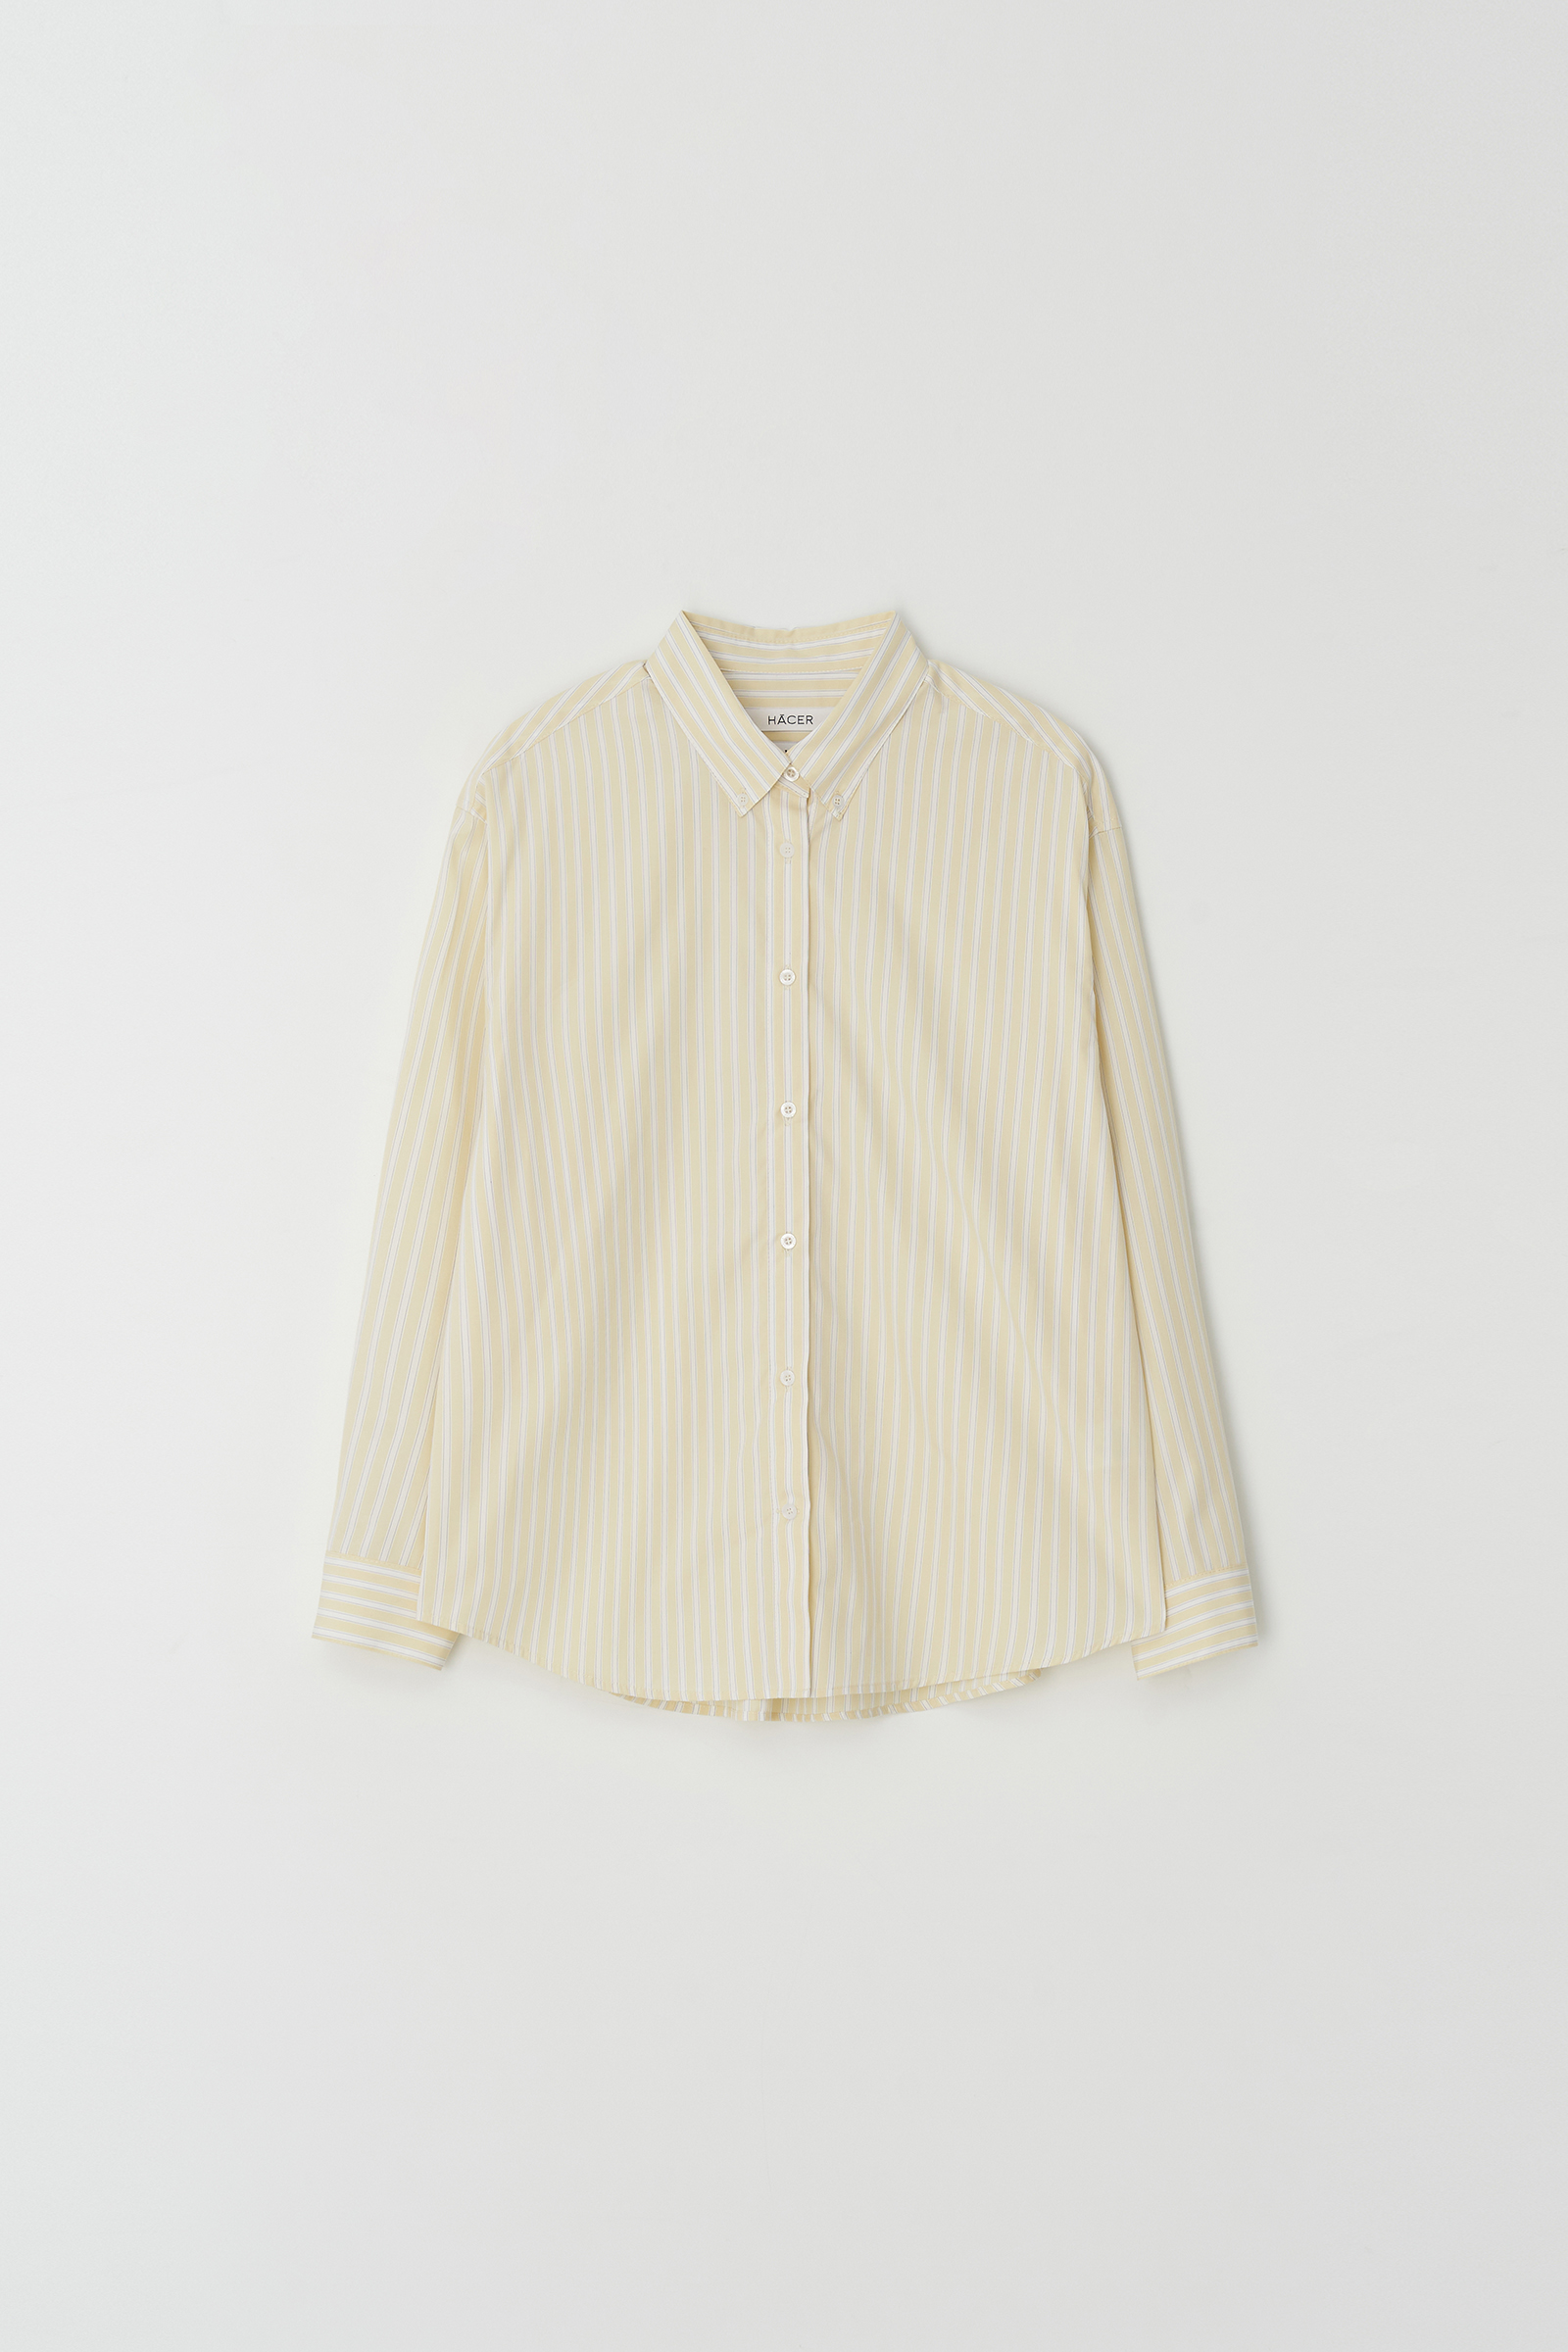 [2nd] Ichimen Stripe Shirt (Fabric By ICHIMEN)